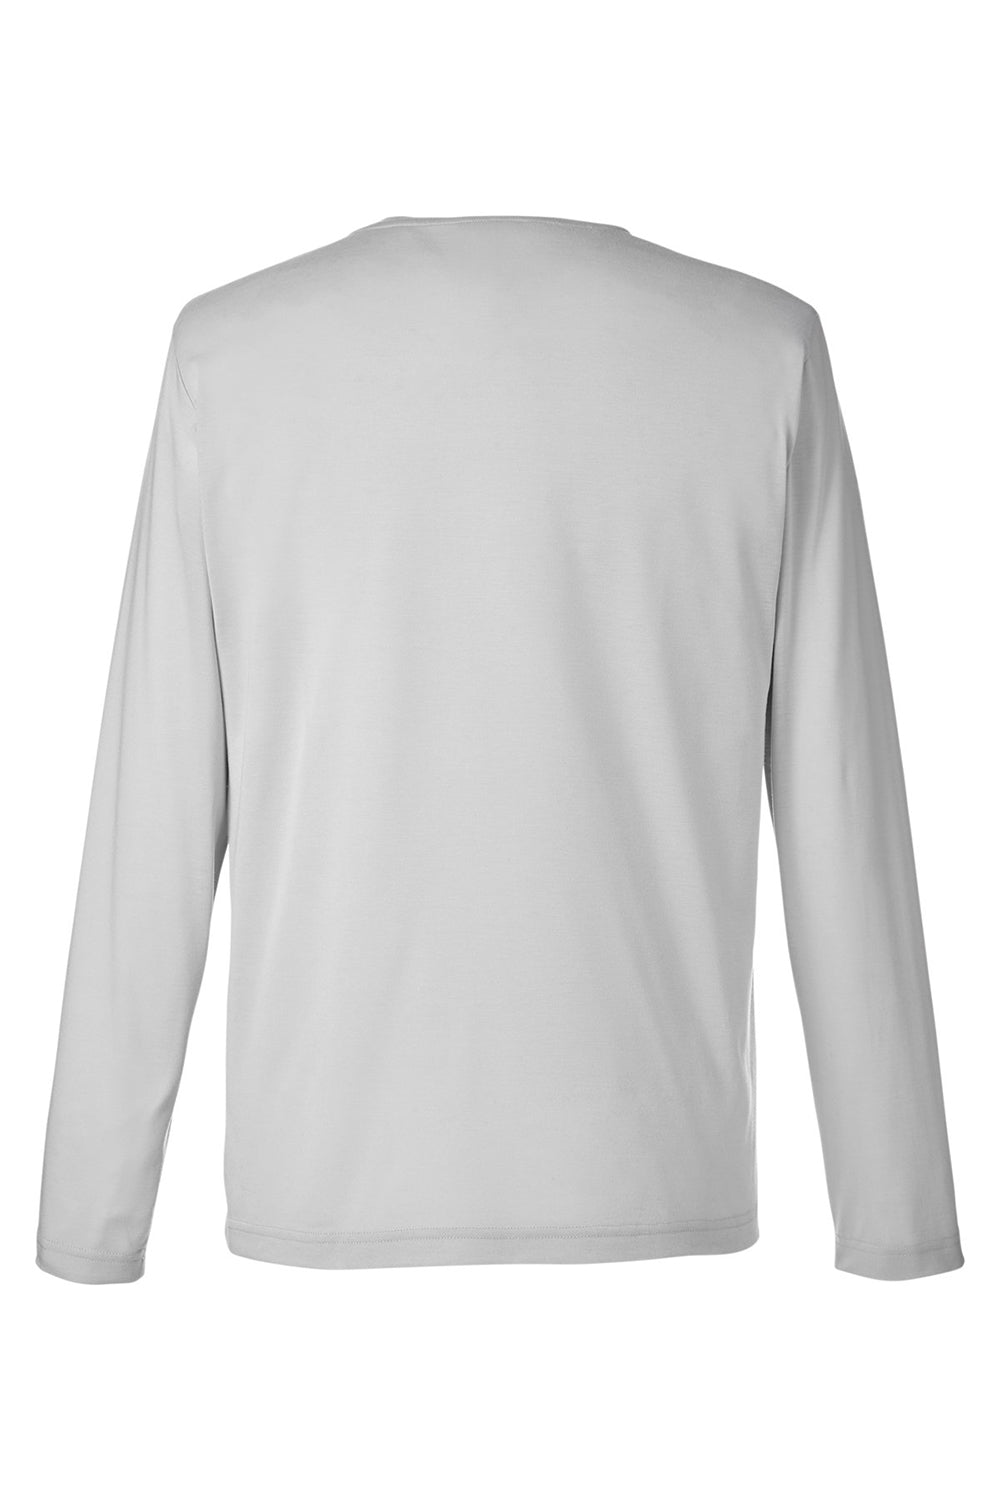 Core 365 CE111L Mens Fusion ChromaSoft Performance Moisture Wicking Long Sleeve Crewneck T-Shirt Platinum Grey Flat Back